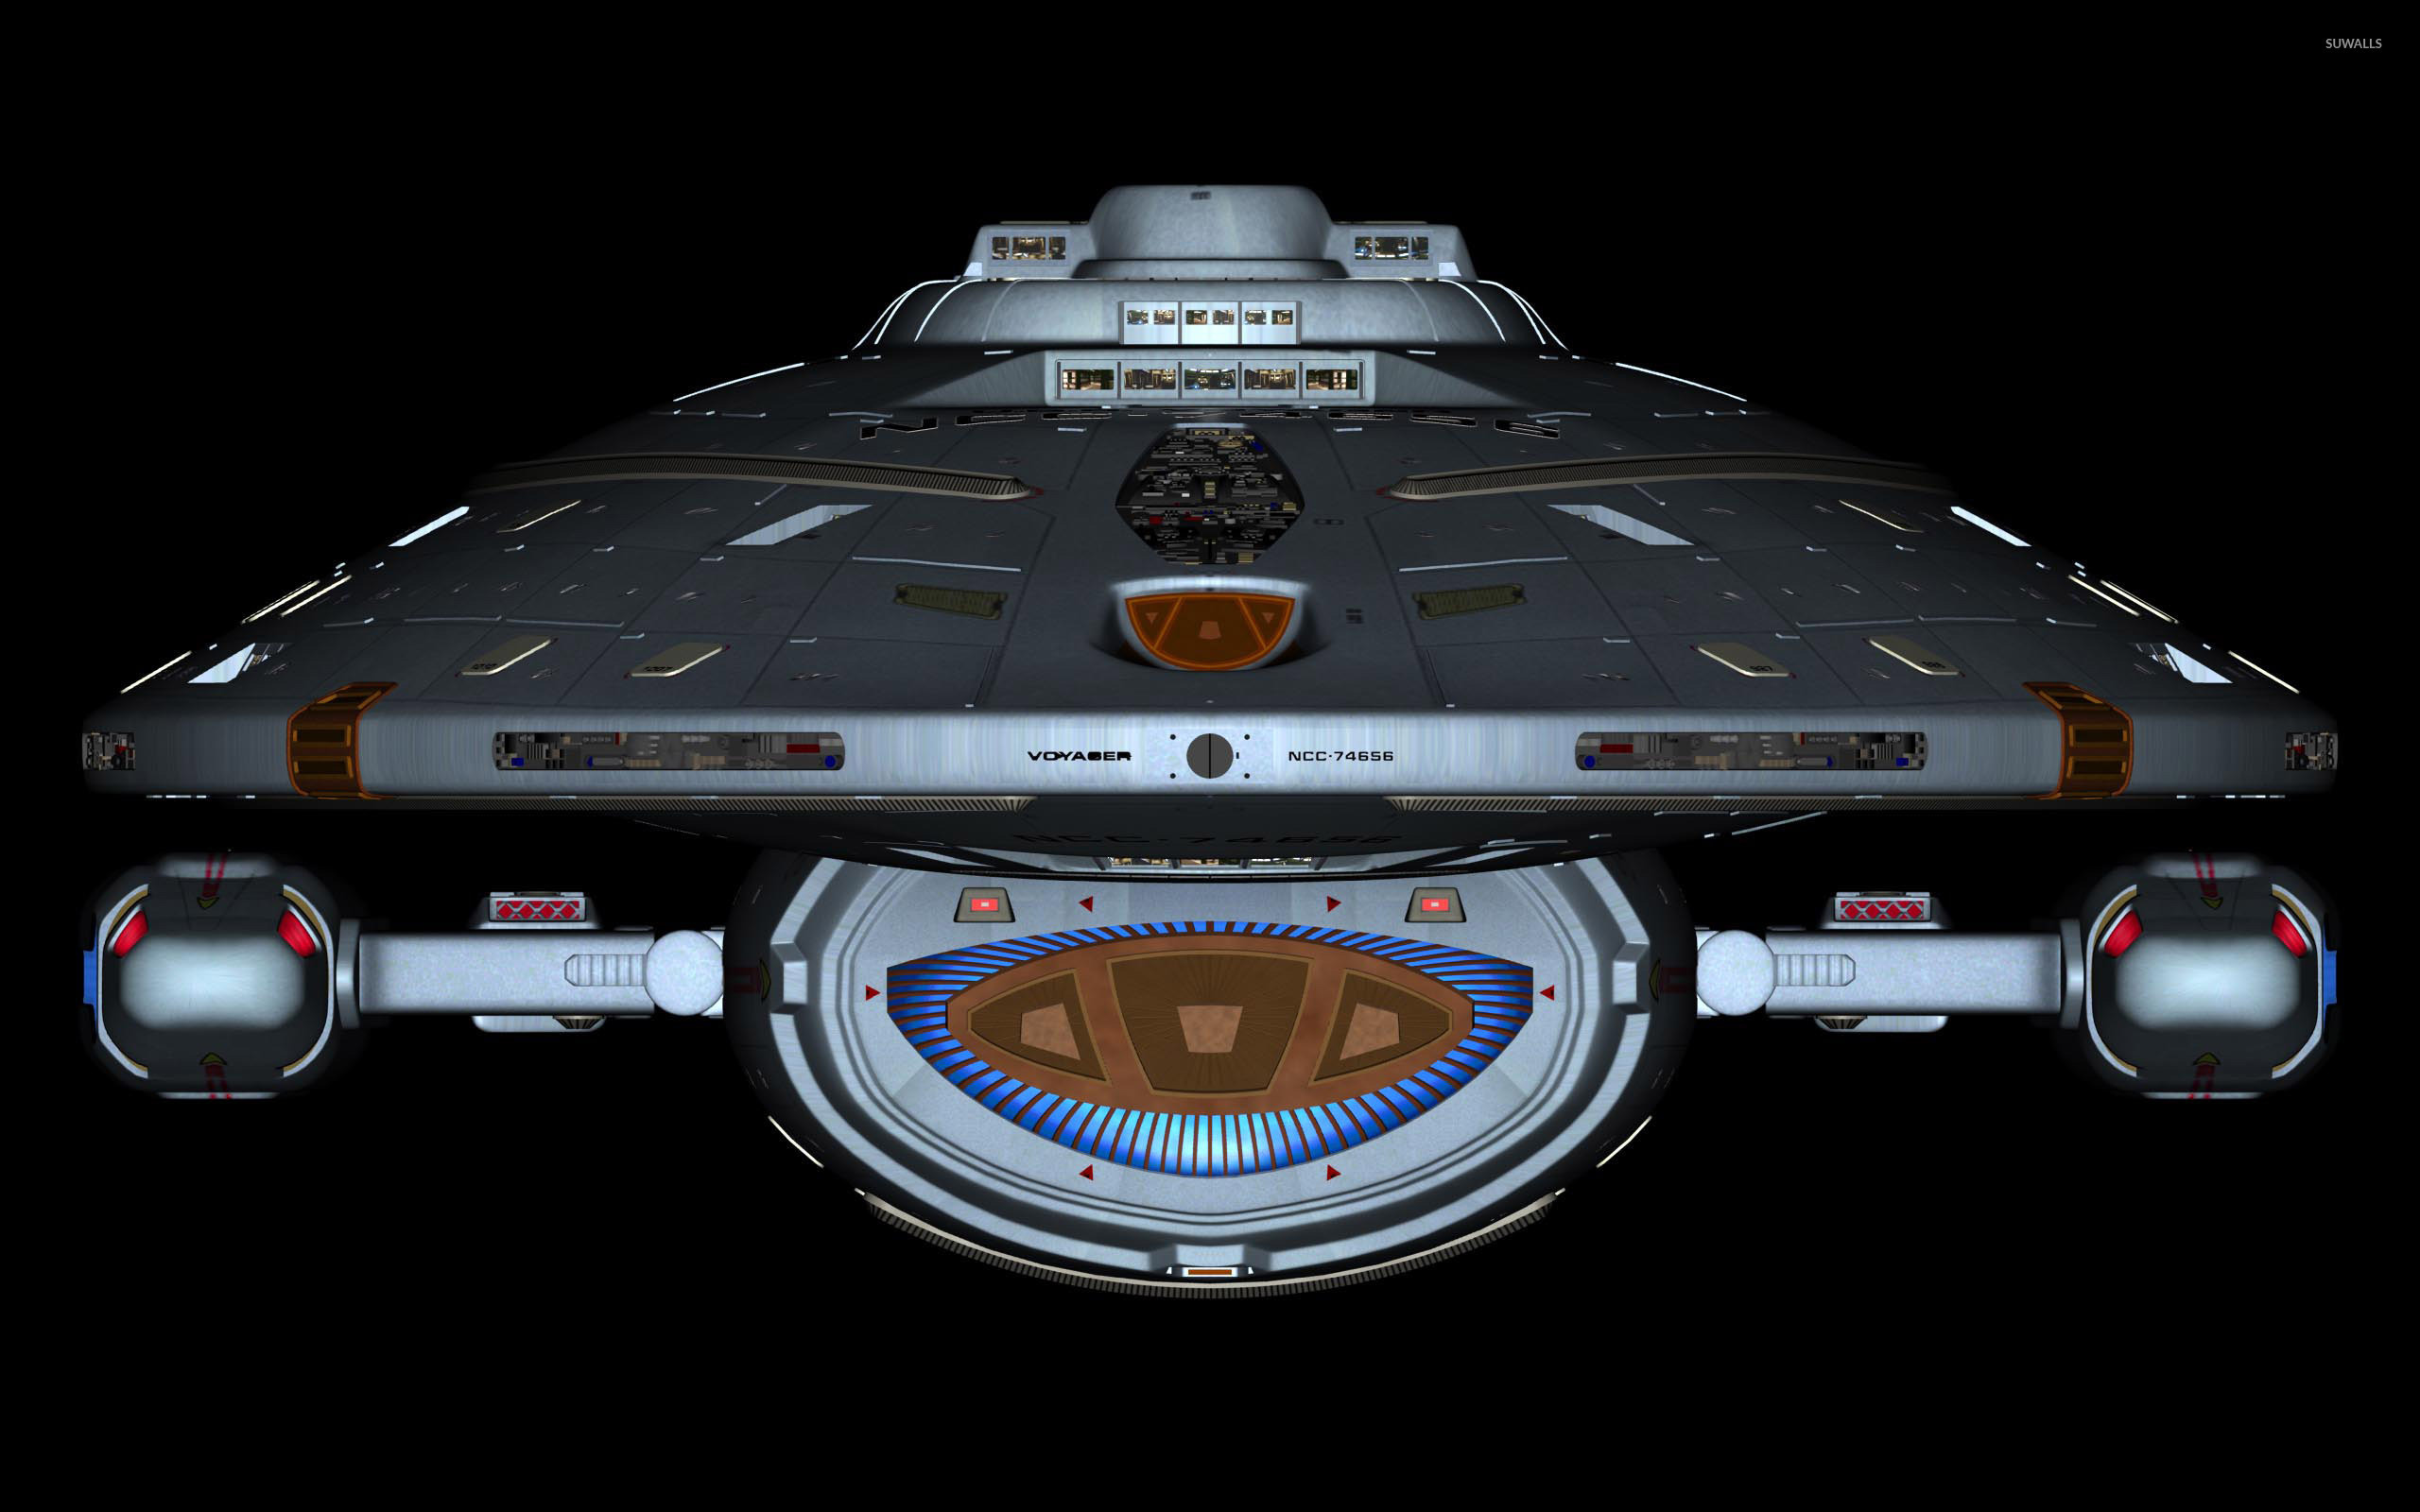 2560x1600 USS Voyager - Star Trek wallpaper